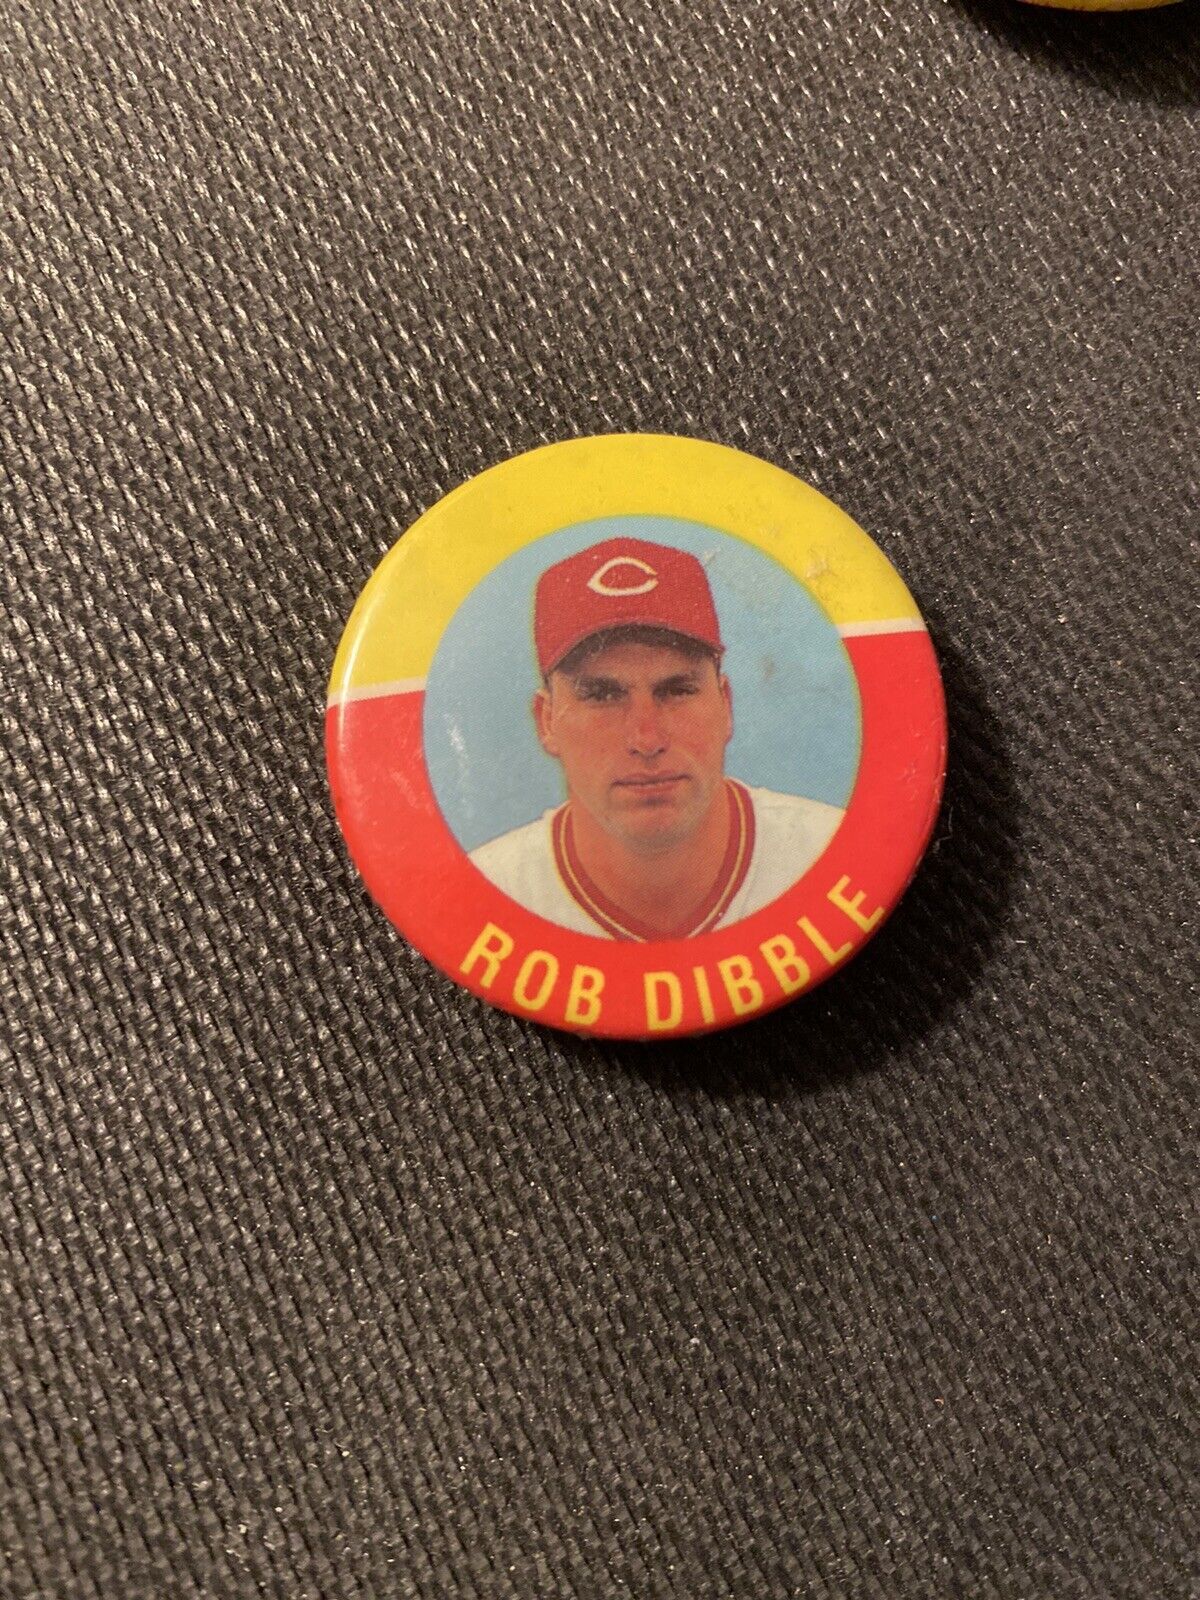 1992 - Rob Dibble  - Cincinnati Reds - Baseball Button Pinback  - Sports Button